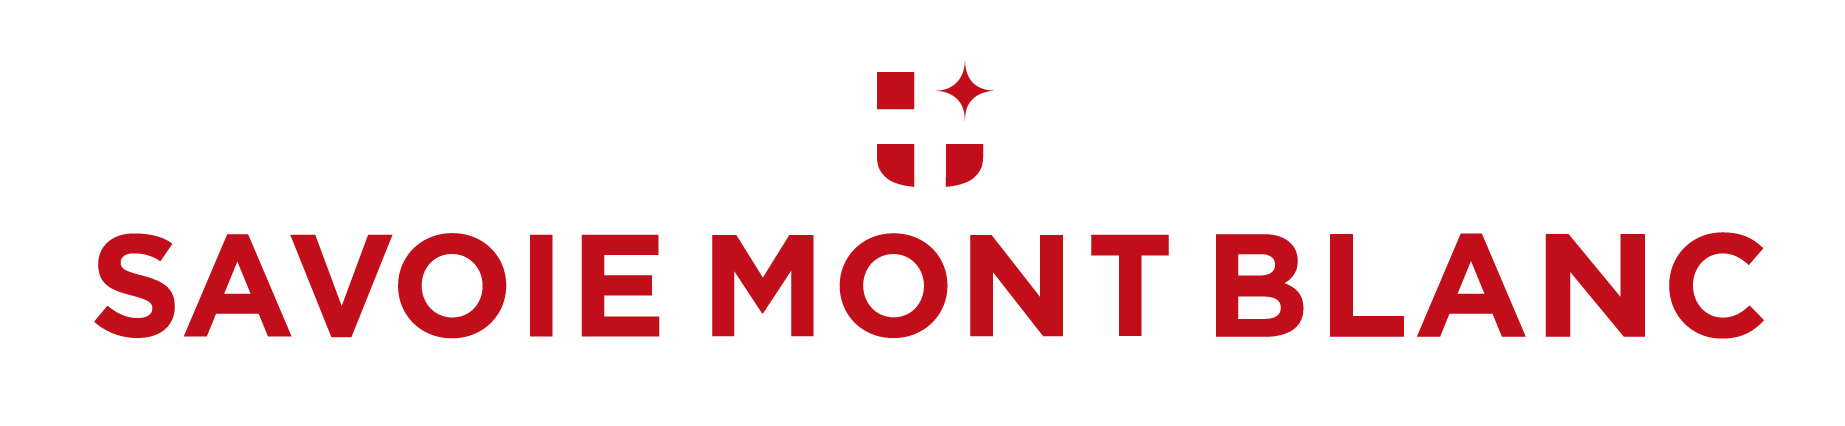 Logo Savoie Mont Blanc - bandeau.jpg